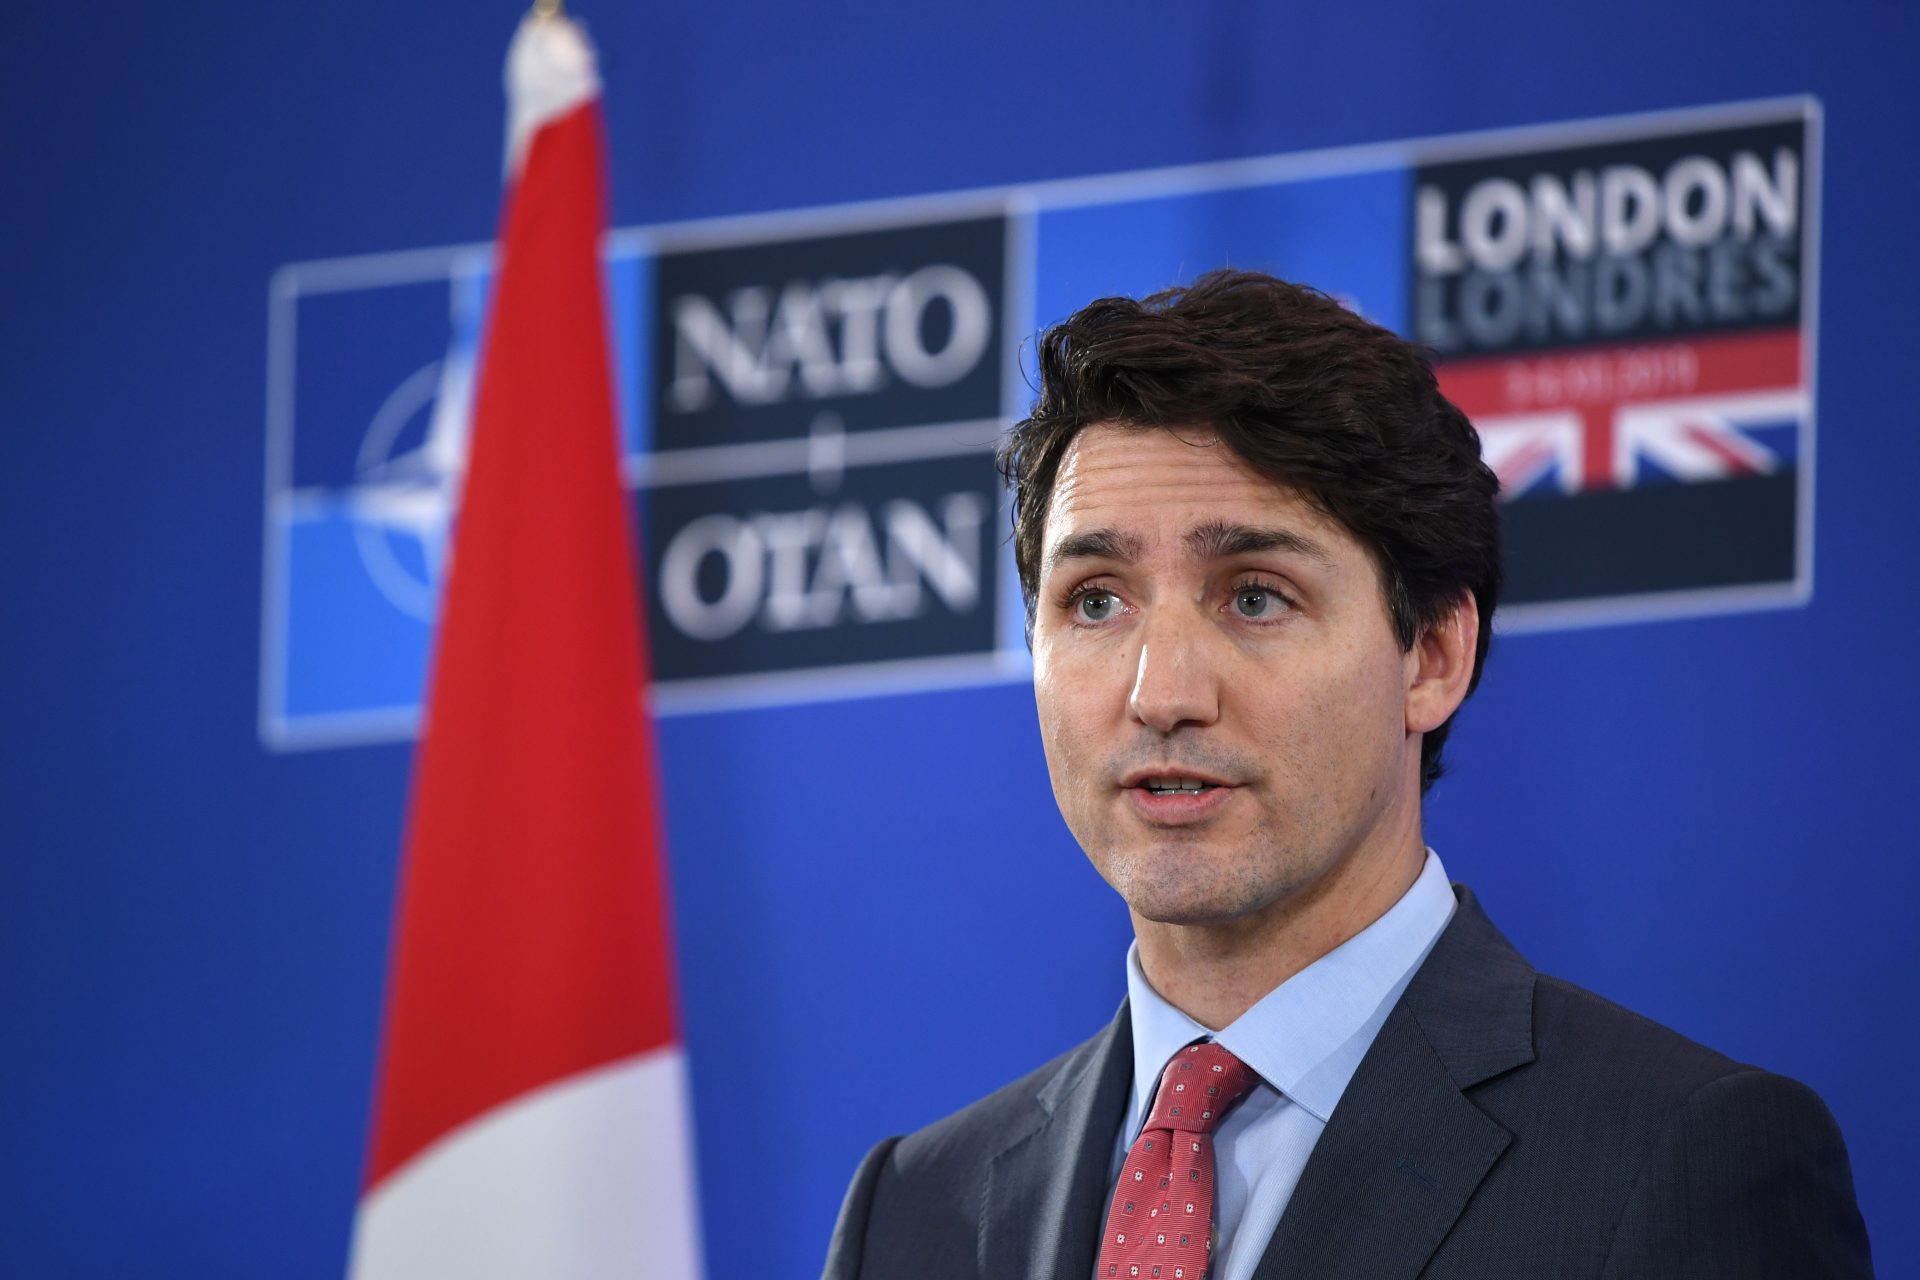 Will Justin Trudeau announce canada will meet NATO's spending obligation? 